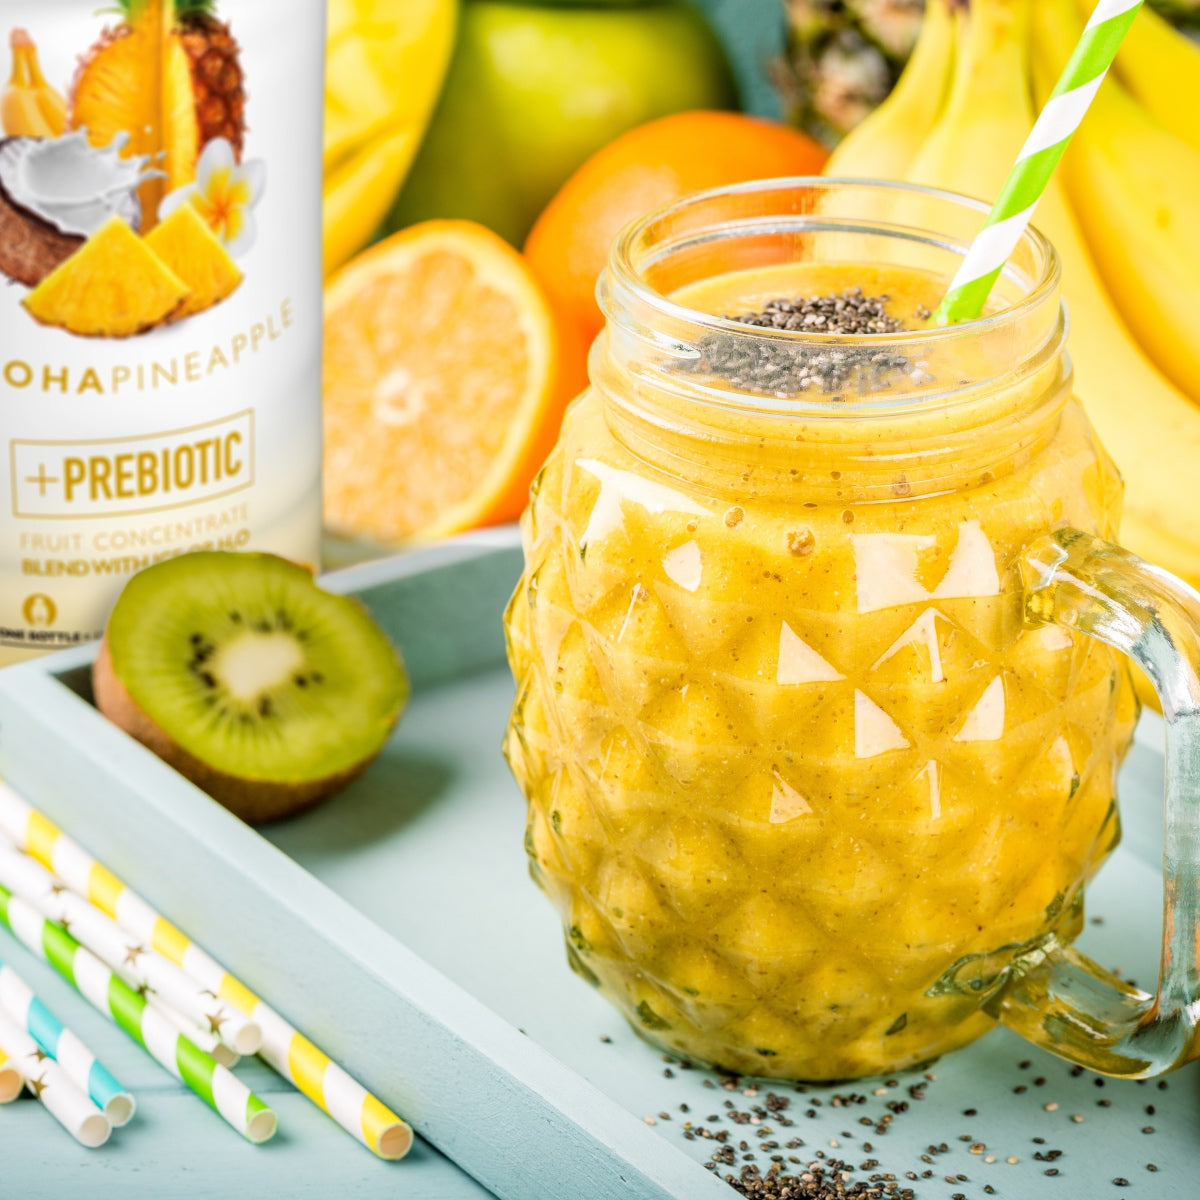 SmartFruit - 100% Real Fruit Puree: 48 fl. oz. Bottle: Aloha Pineapple